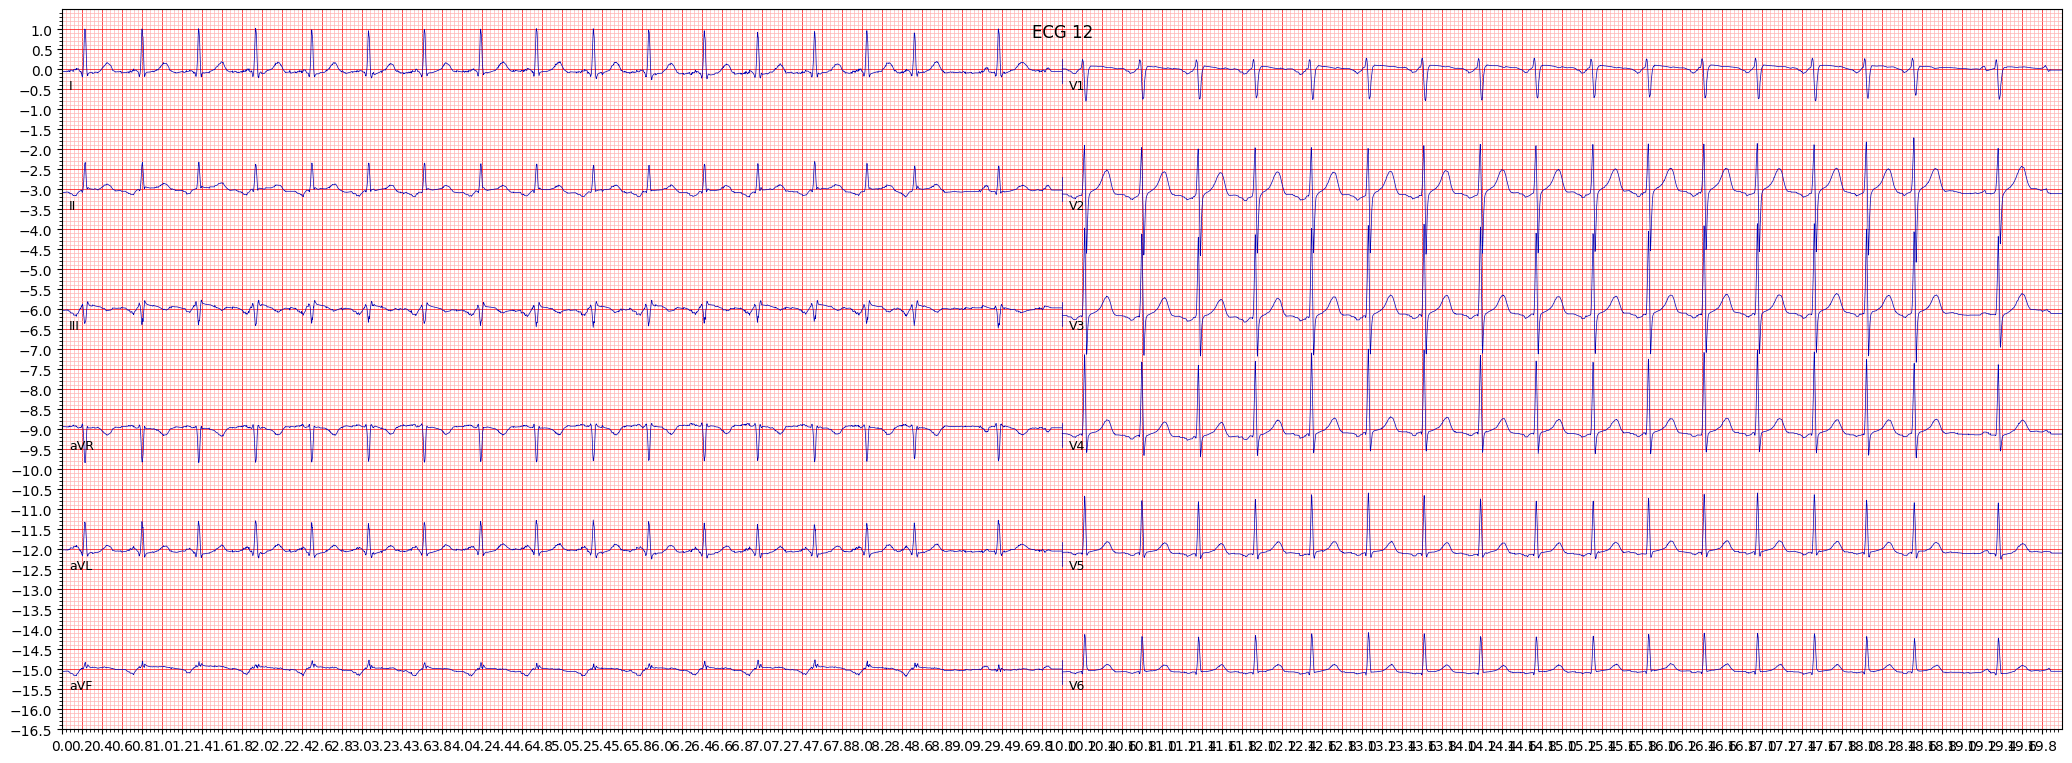 paroxysmal supraventricular tachycardia (PSVT) example 12489